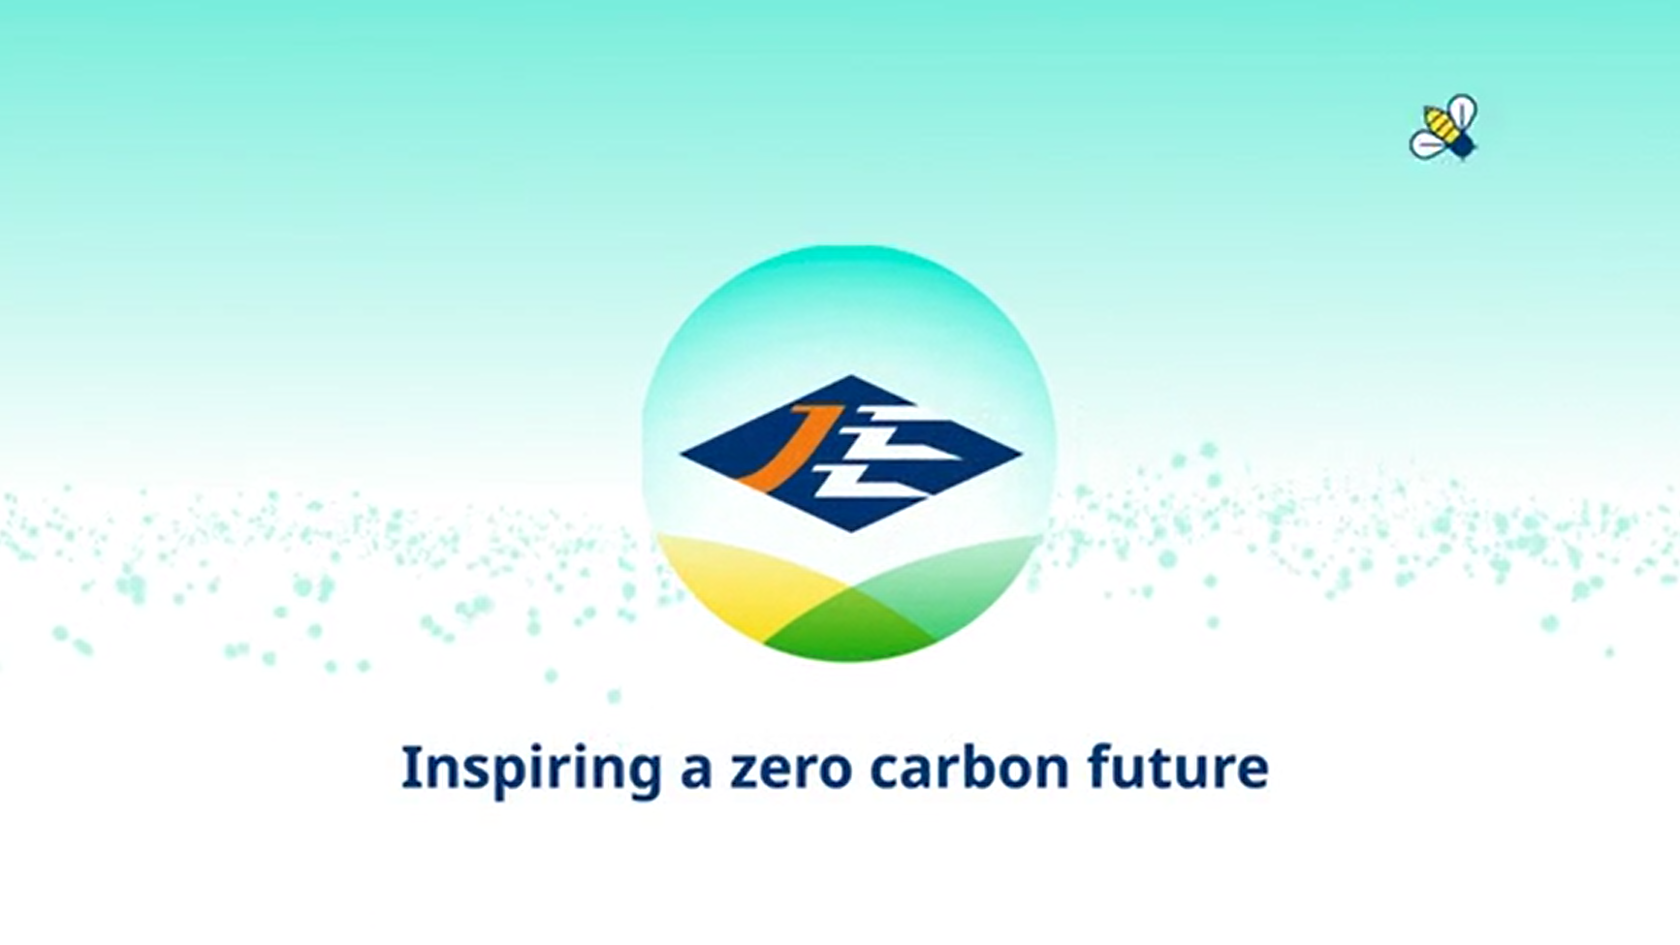 Inspiting a zero carbon future